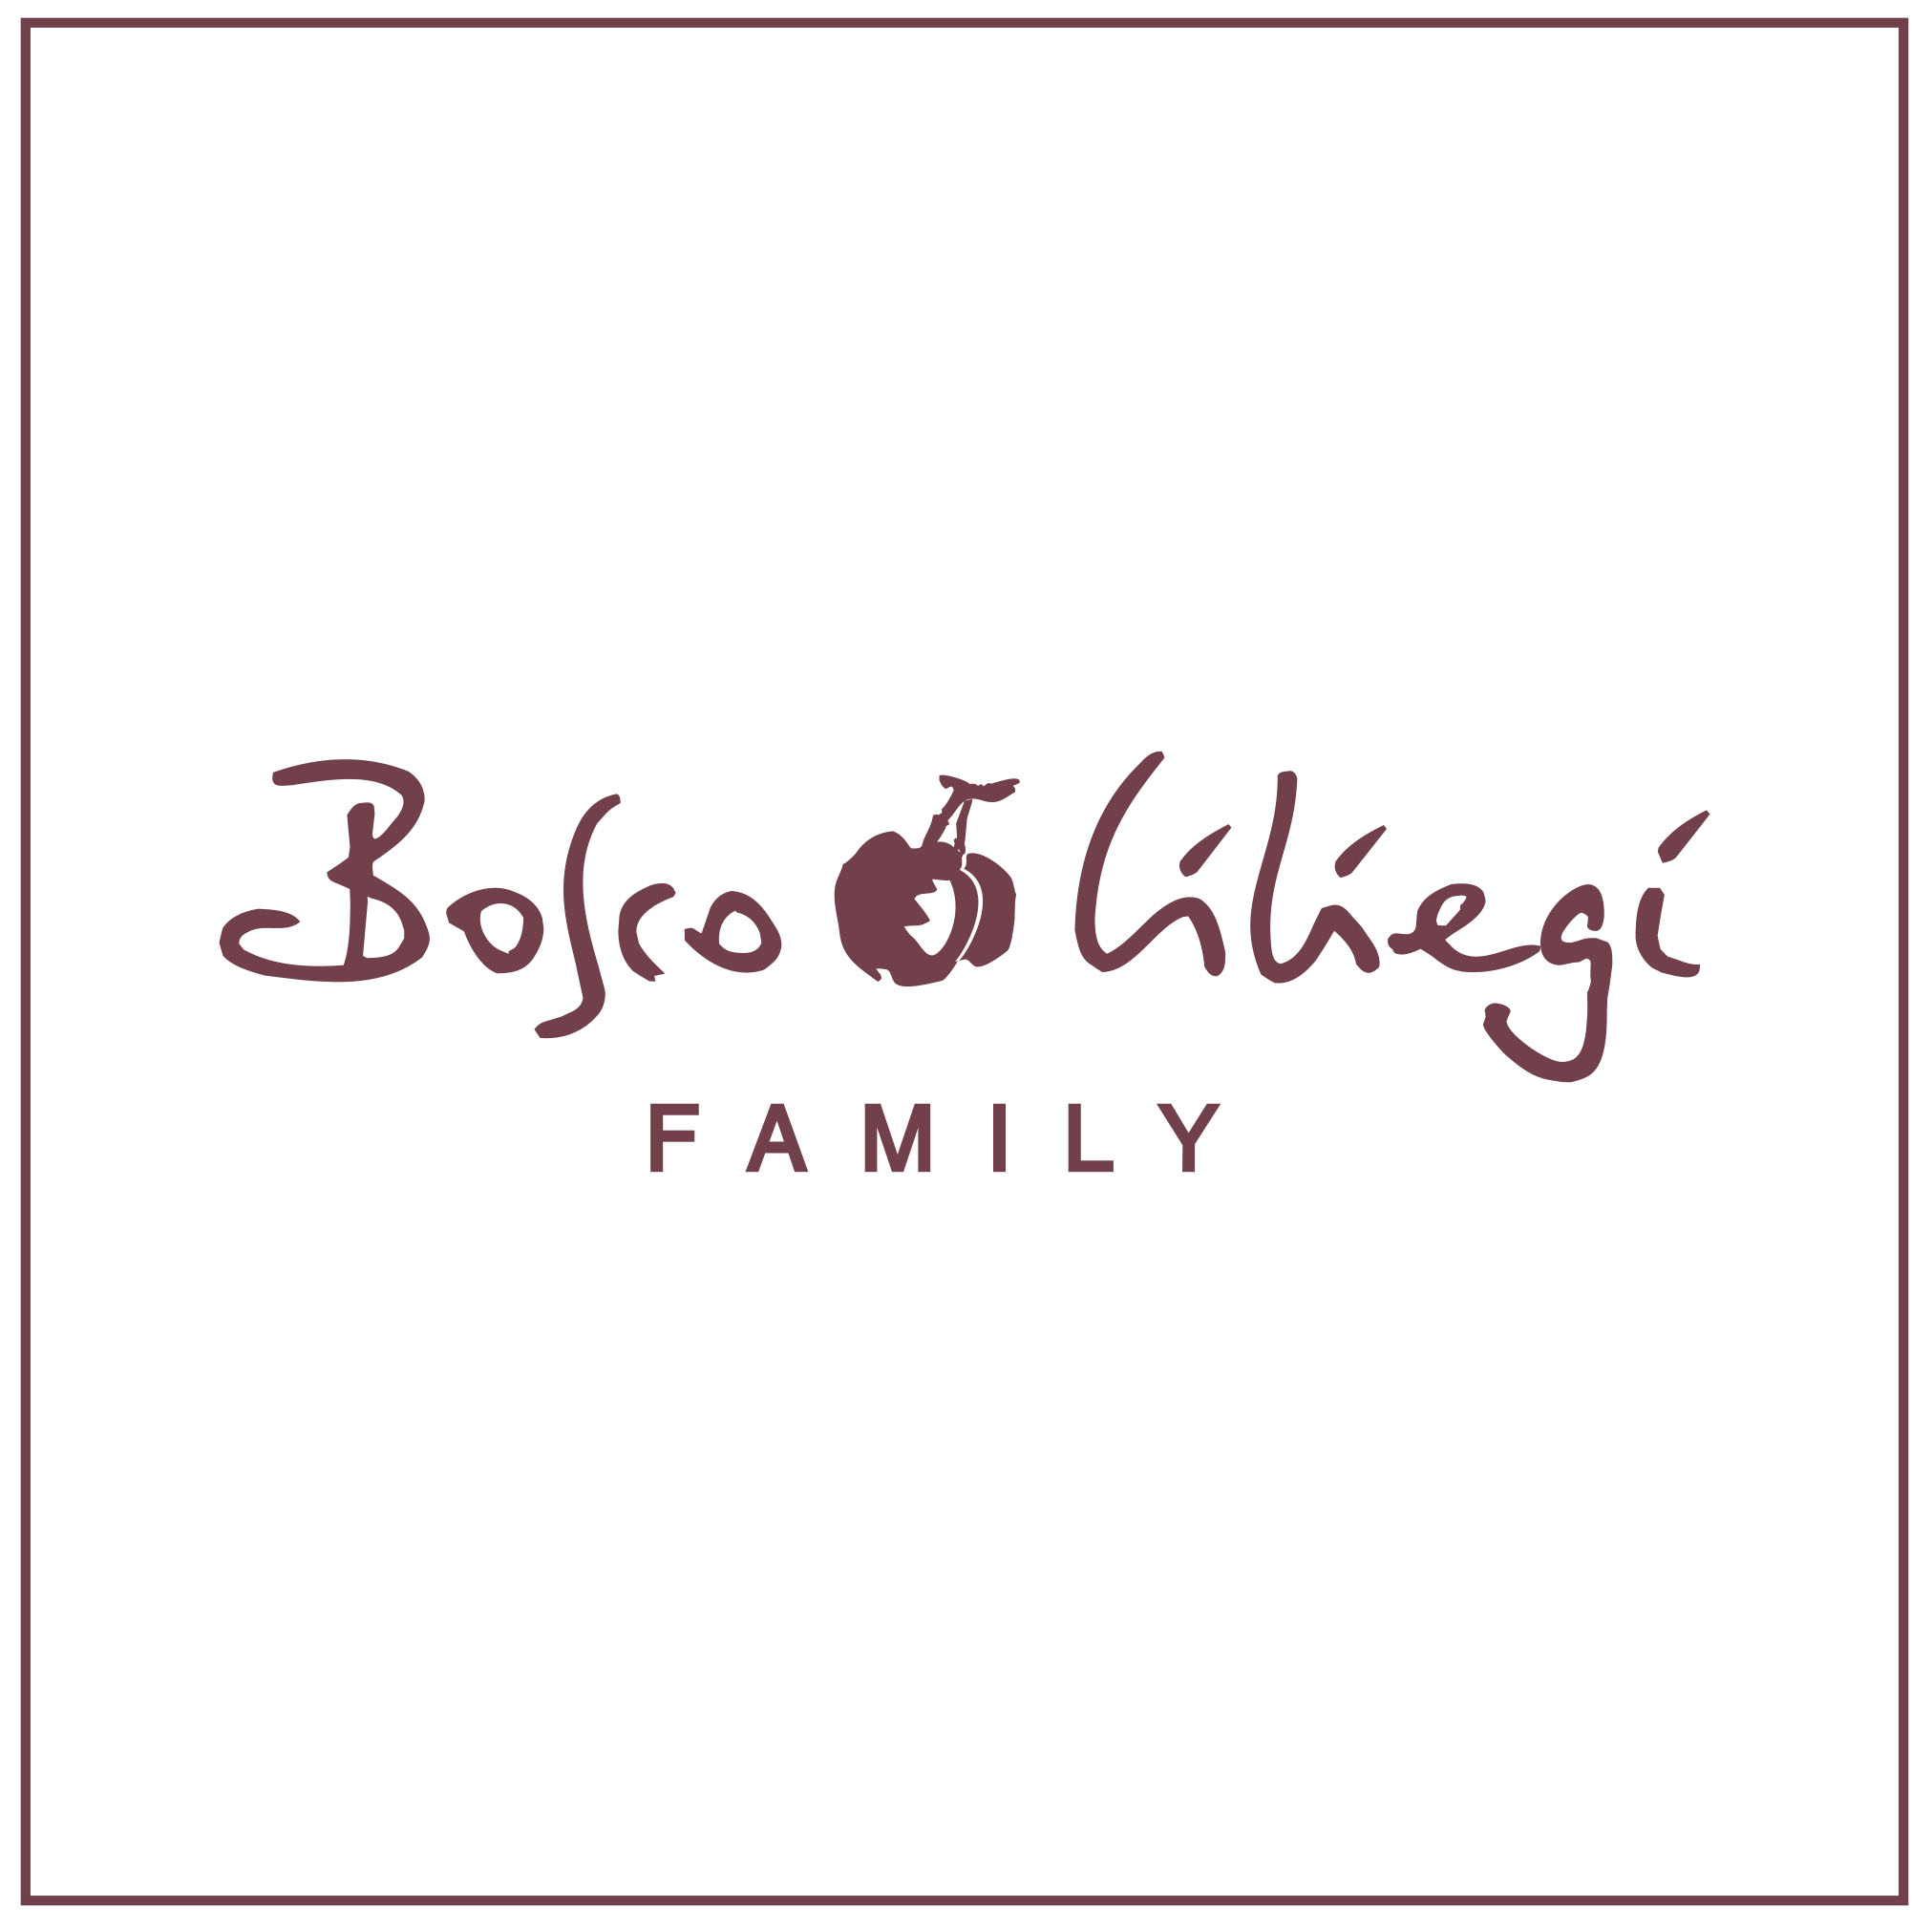 Боско чильеджи. Bosco di Ciliegi компания. Логотипboscodiciliegi. Bosco Family логотип. Боско ди Чильеджи лого.